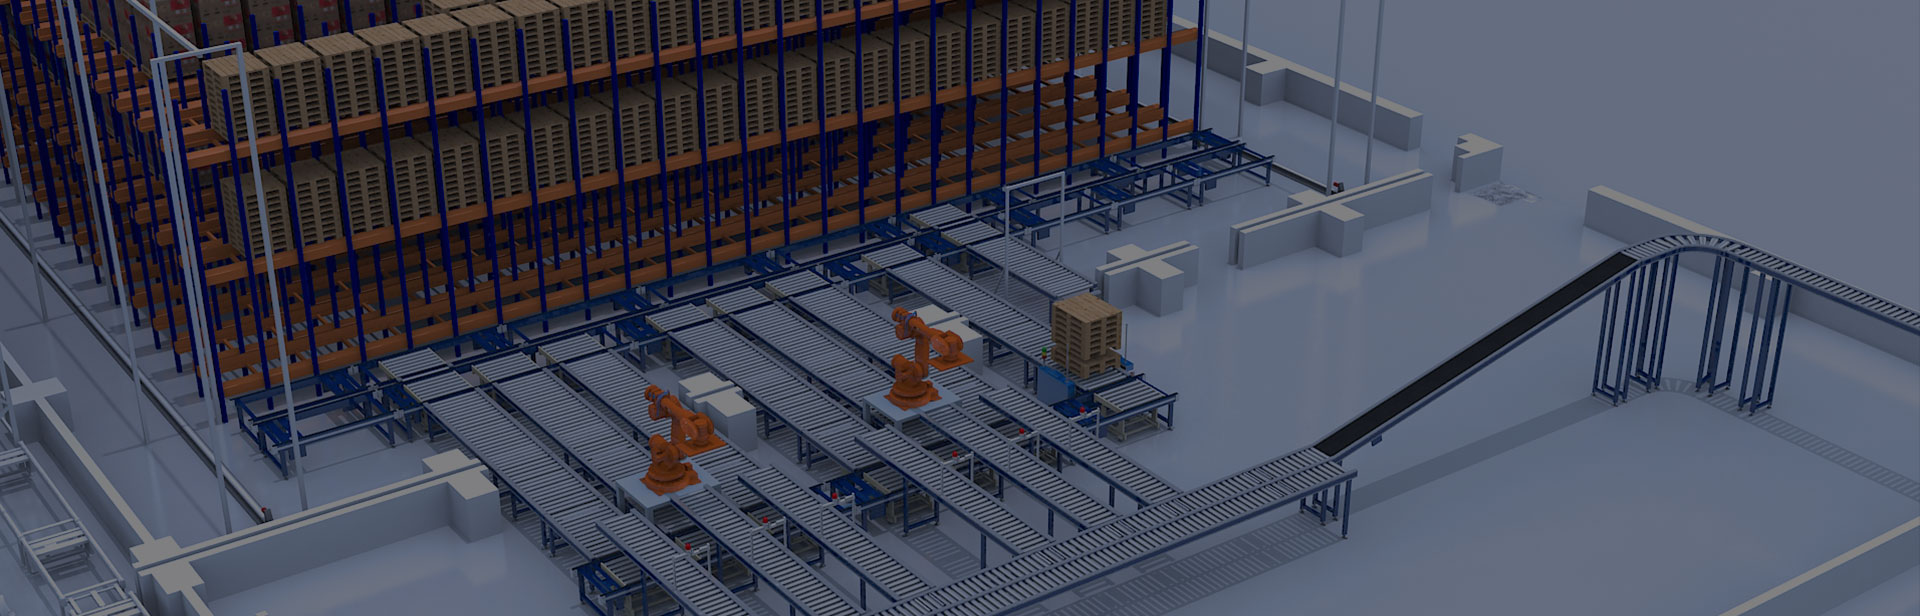 Warehouse Logistics Automation System